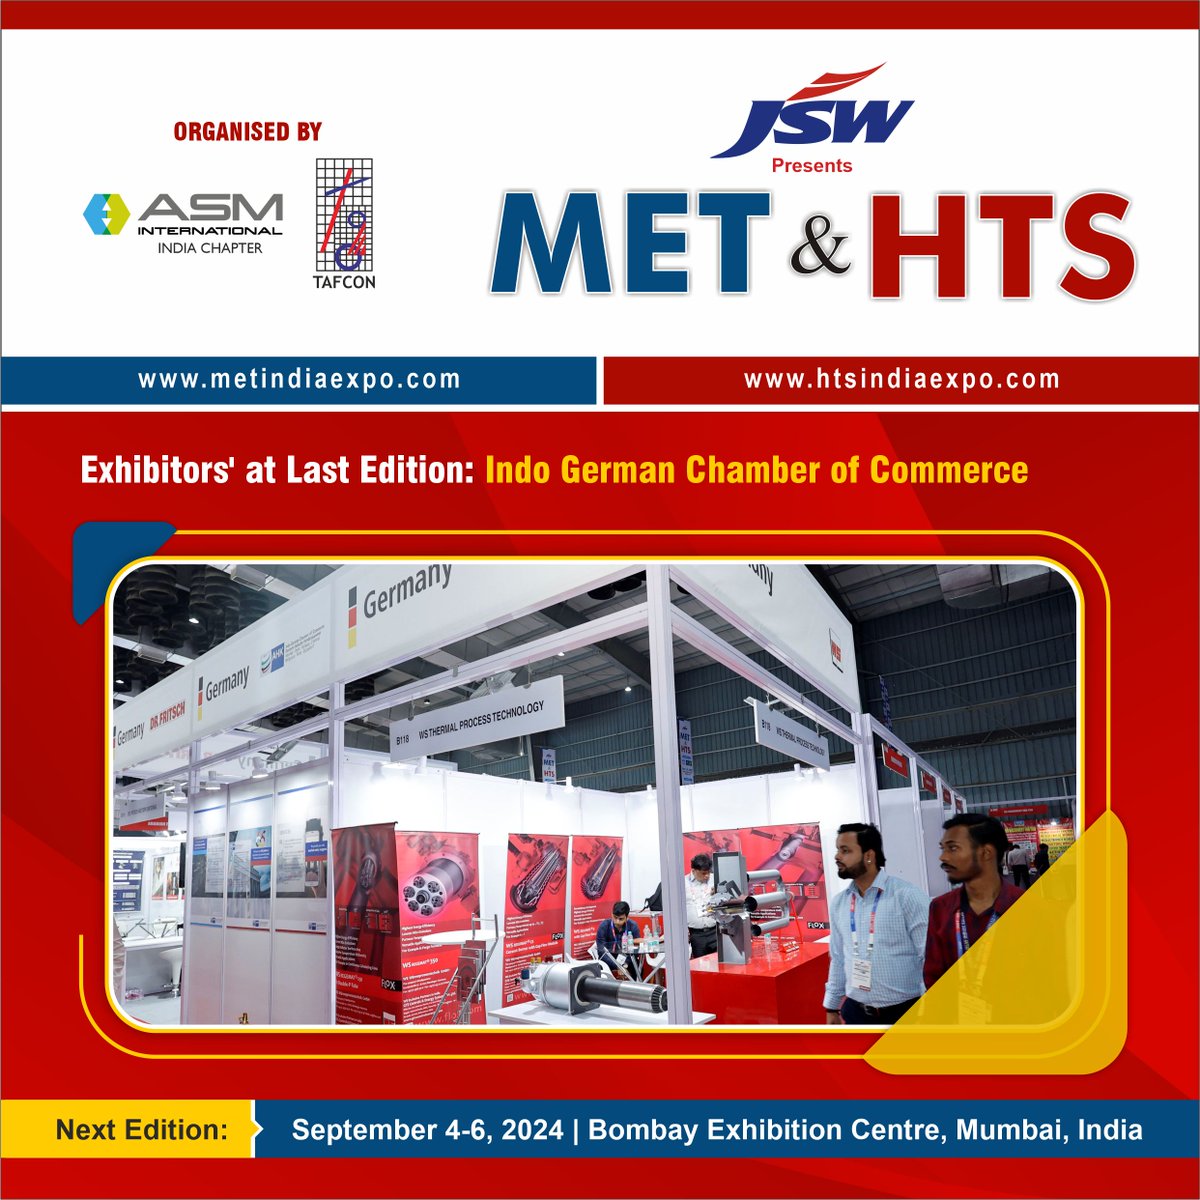 Exhibitors at Last Edition.
Next Edition - MET & HTS 2024, September 4-6, 2024 | Bombay Exhibition Centre, Mumbai, India.

#metandhts #heattreatment